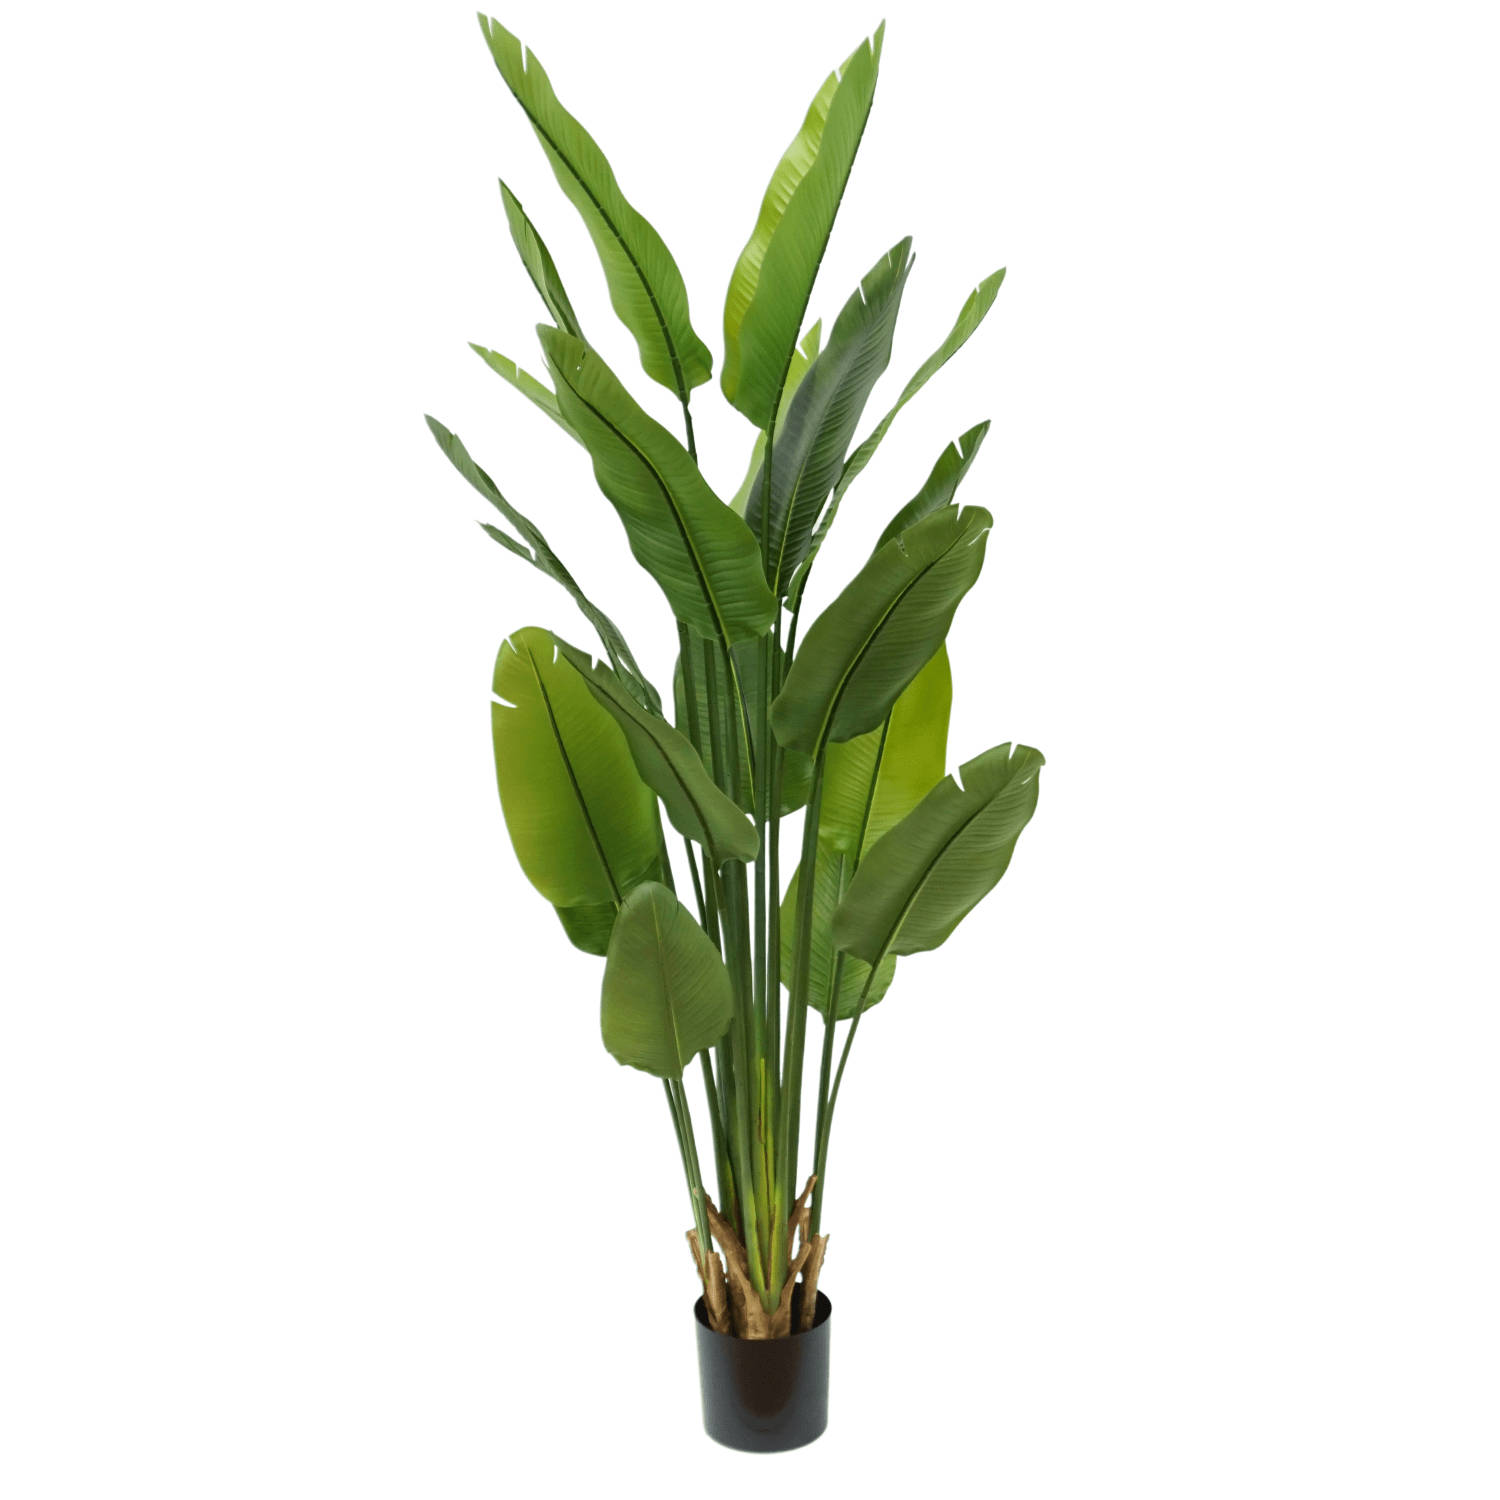 Strelitzia Kunstplant 2 180cm | Grote kunstplant | Kunst kamerplant | Strelitzia kunstplant | Levensechte kunstplant